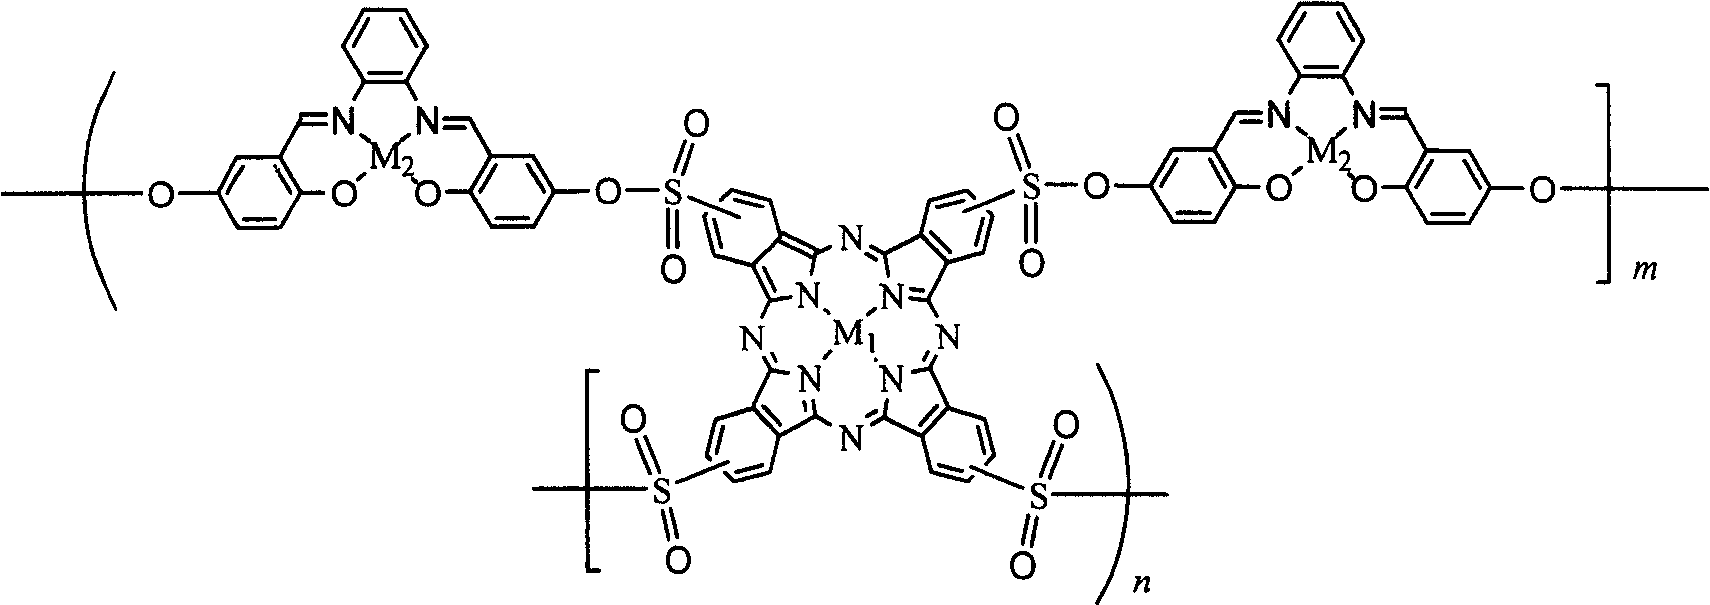 Polymer xifualkali phthalocyanin bimetal compound, its preparation method and application